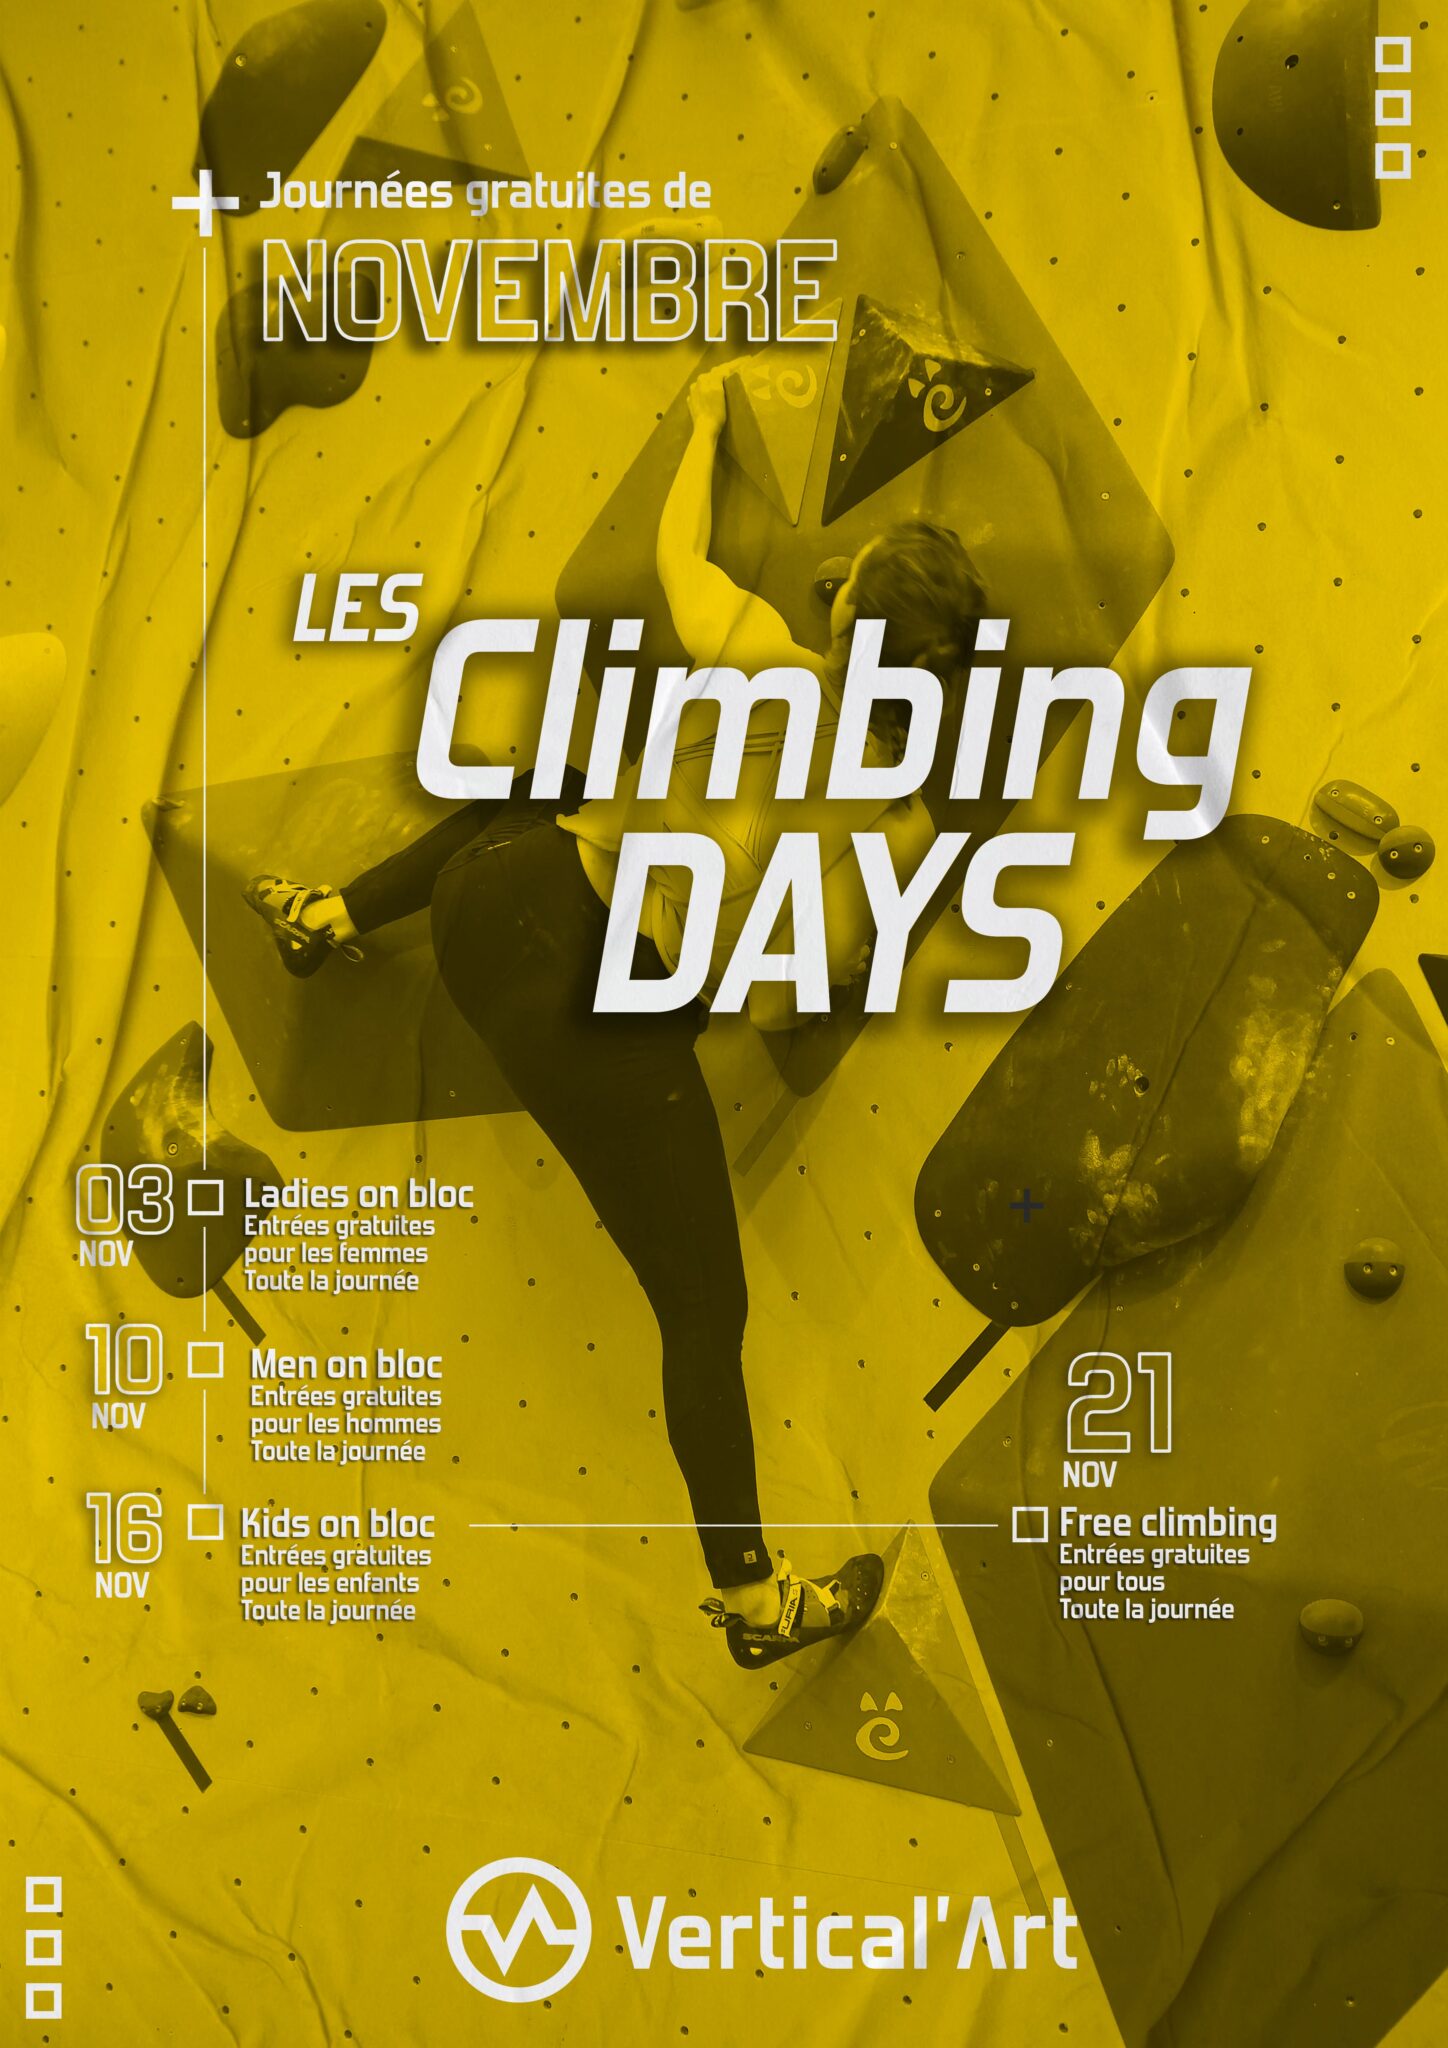 Climbing days à Vertical'Art Nantes Novembre 2022